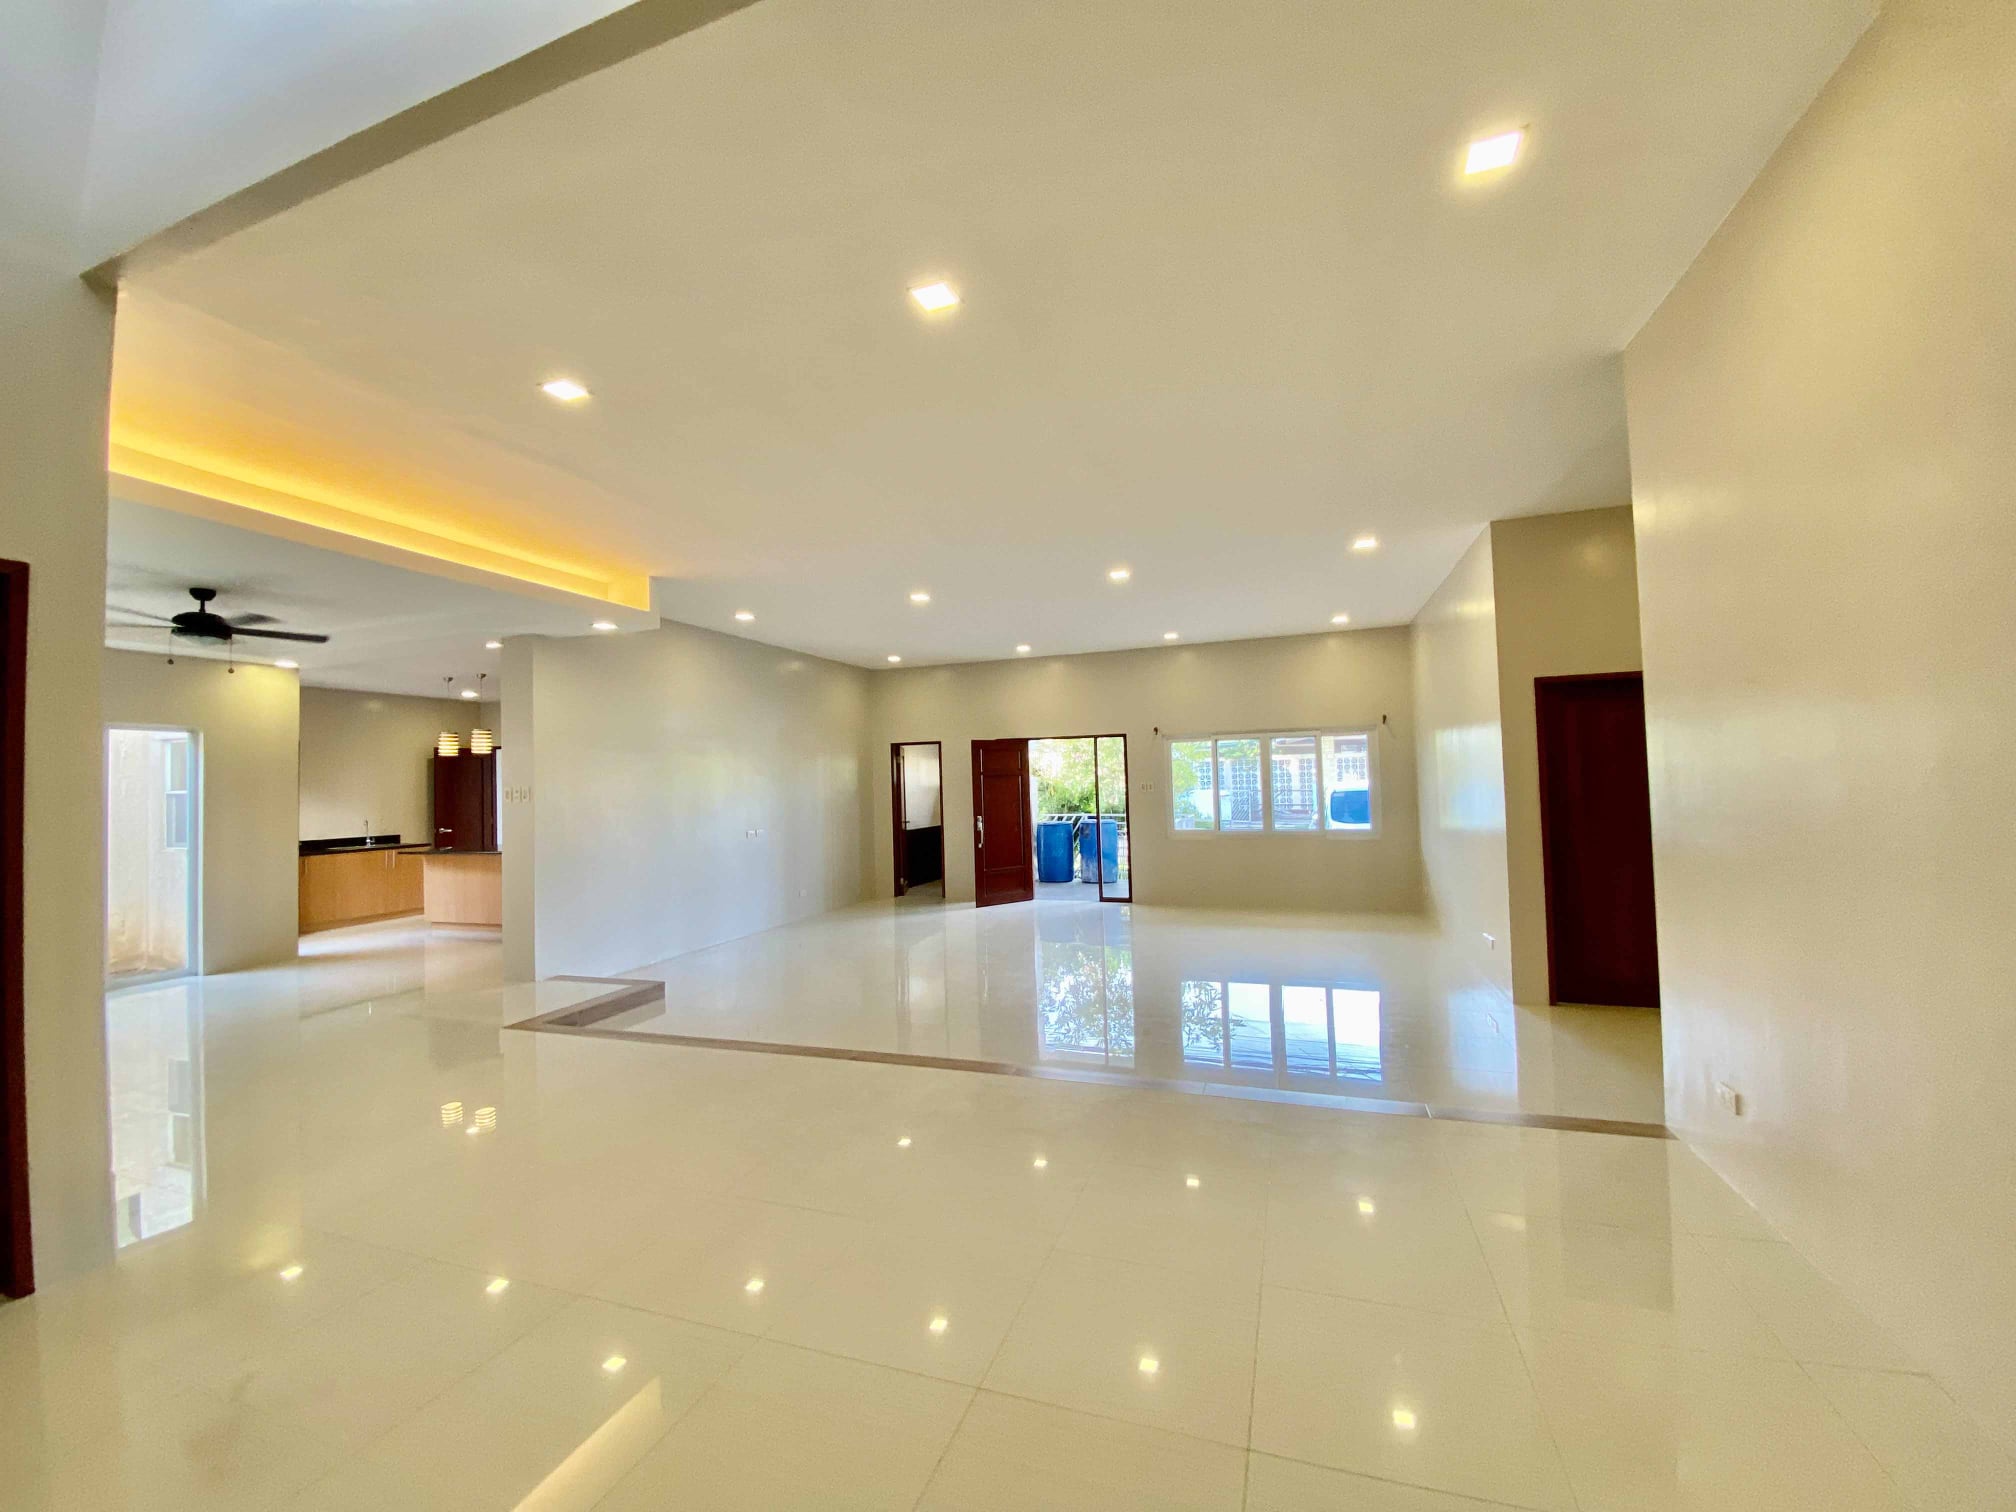 bungalow-house-4-bedroom-for-rent-in-banilad-cebu-city-unfurnished